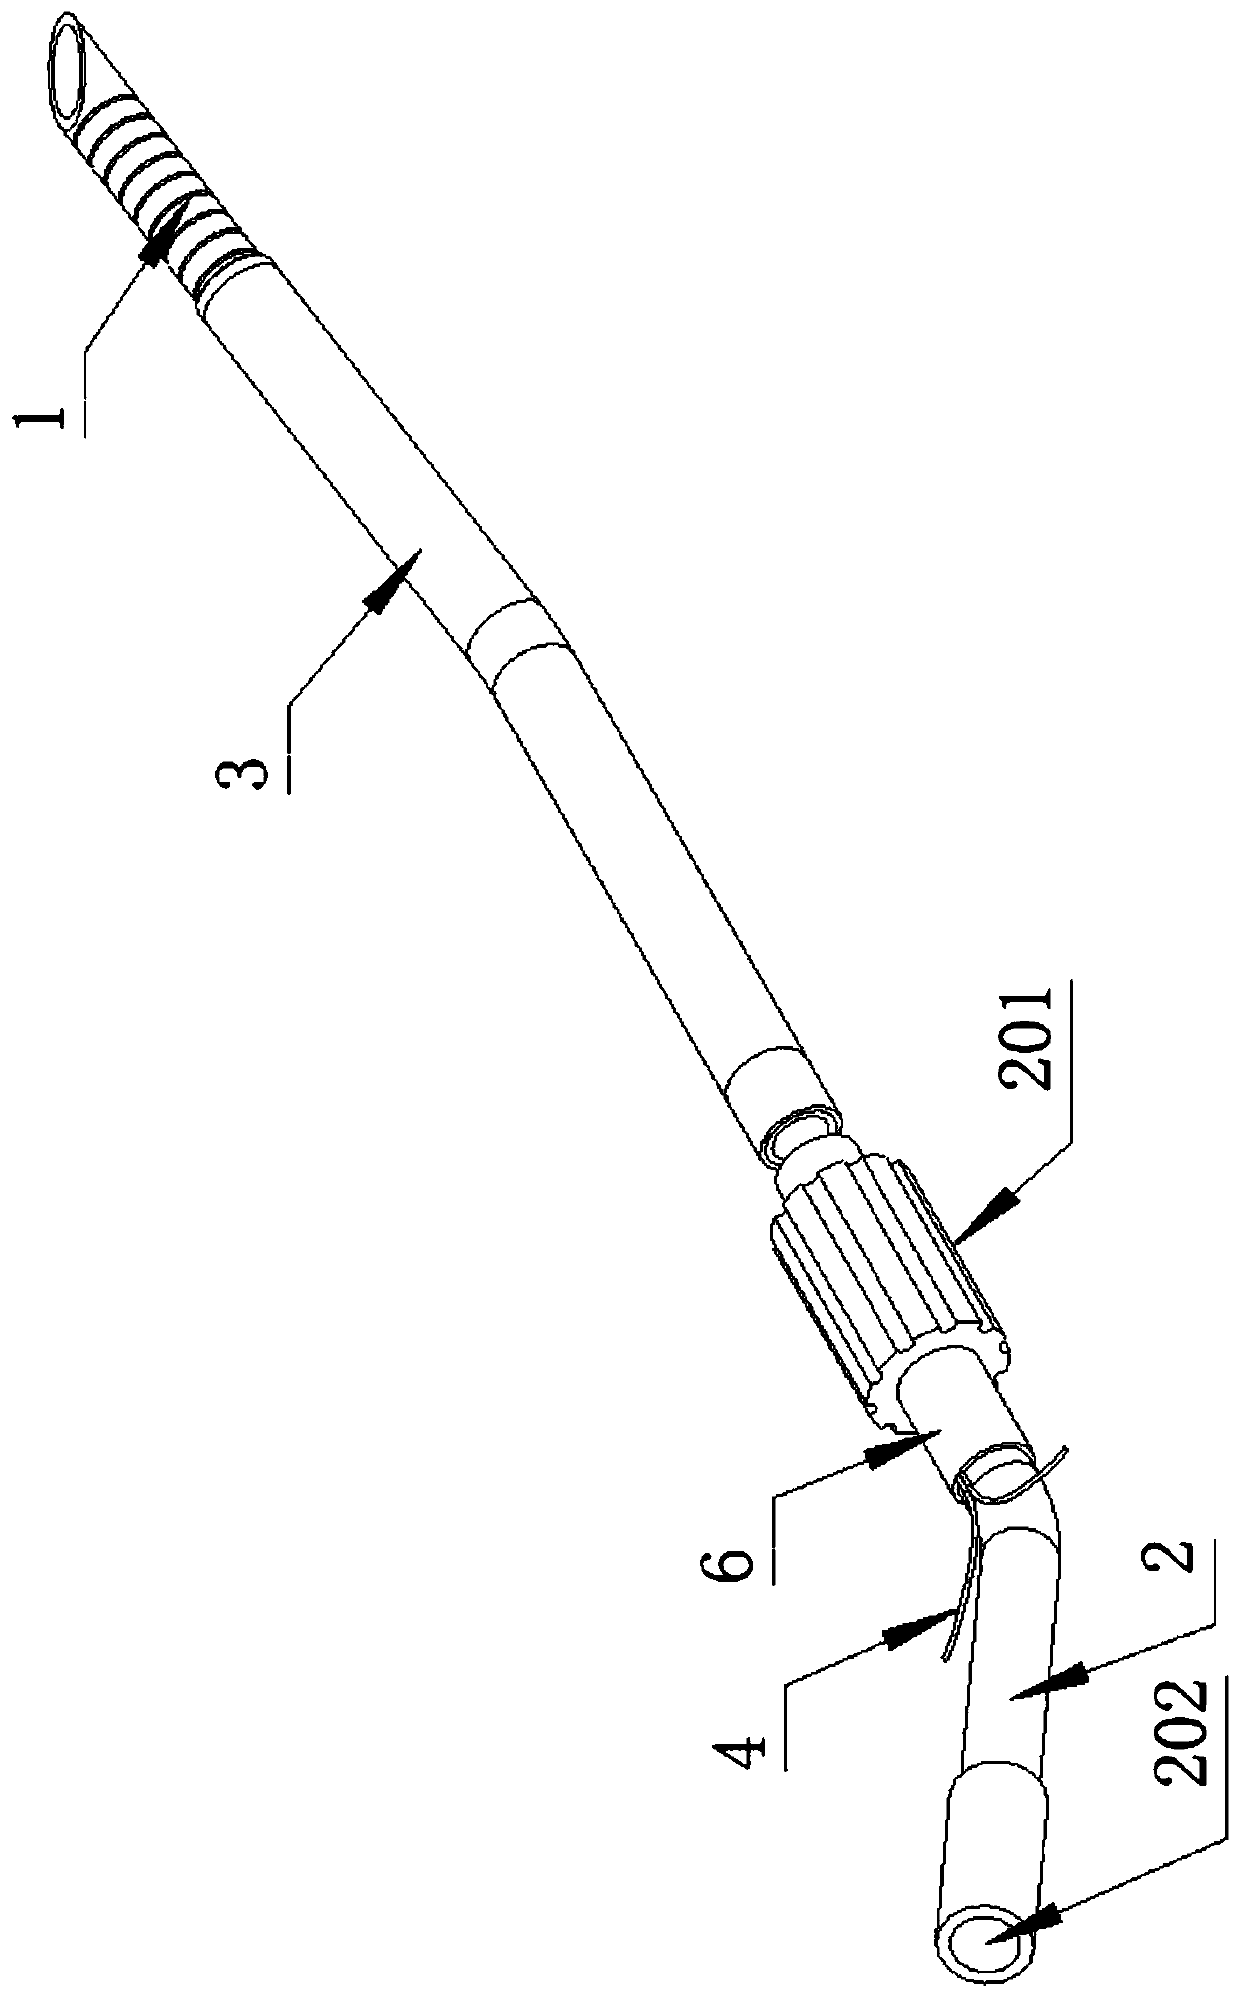 Injection needle for laparoscopic surgery